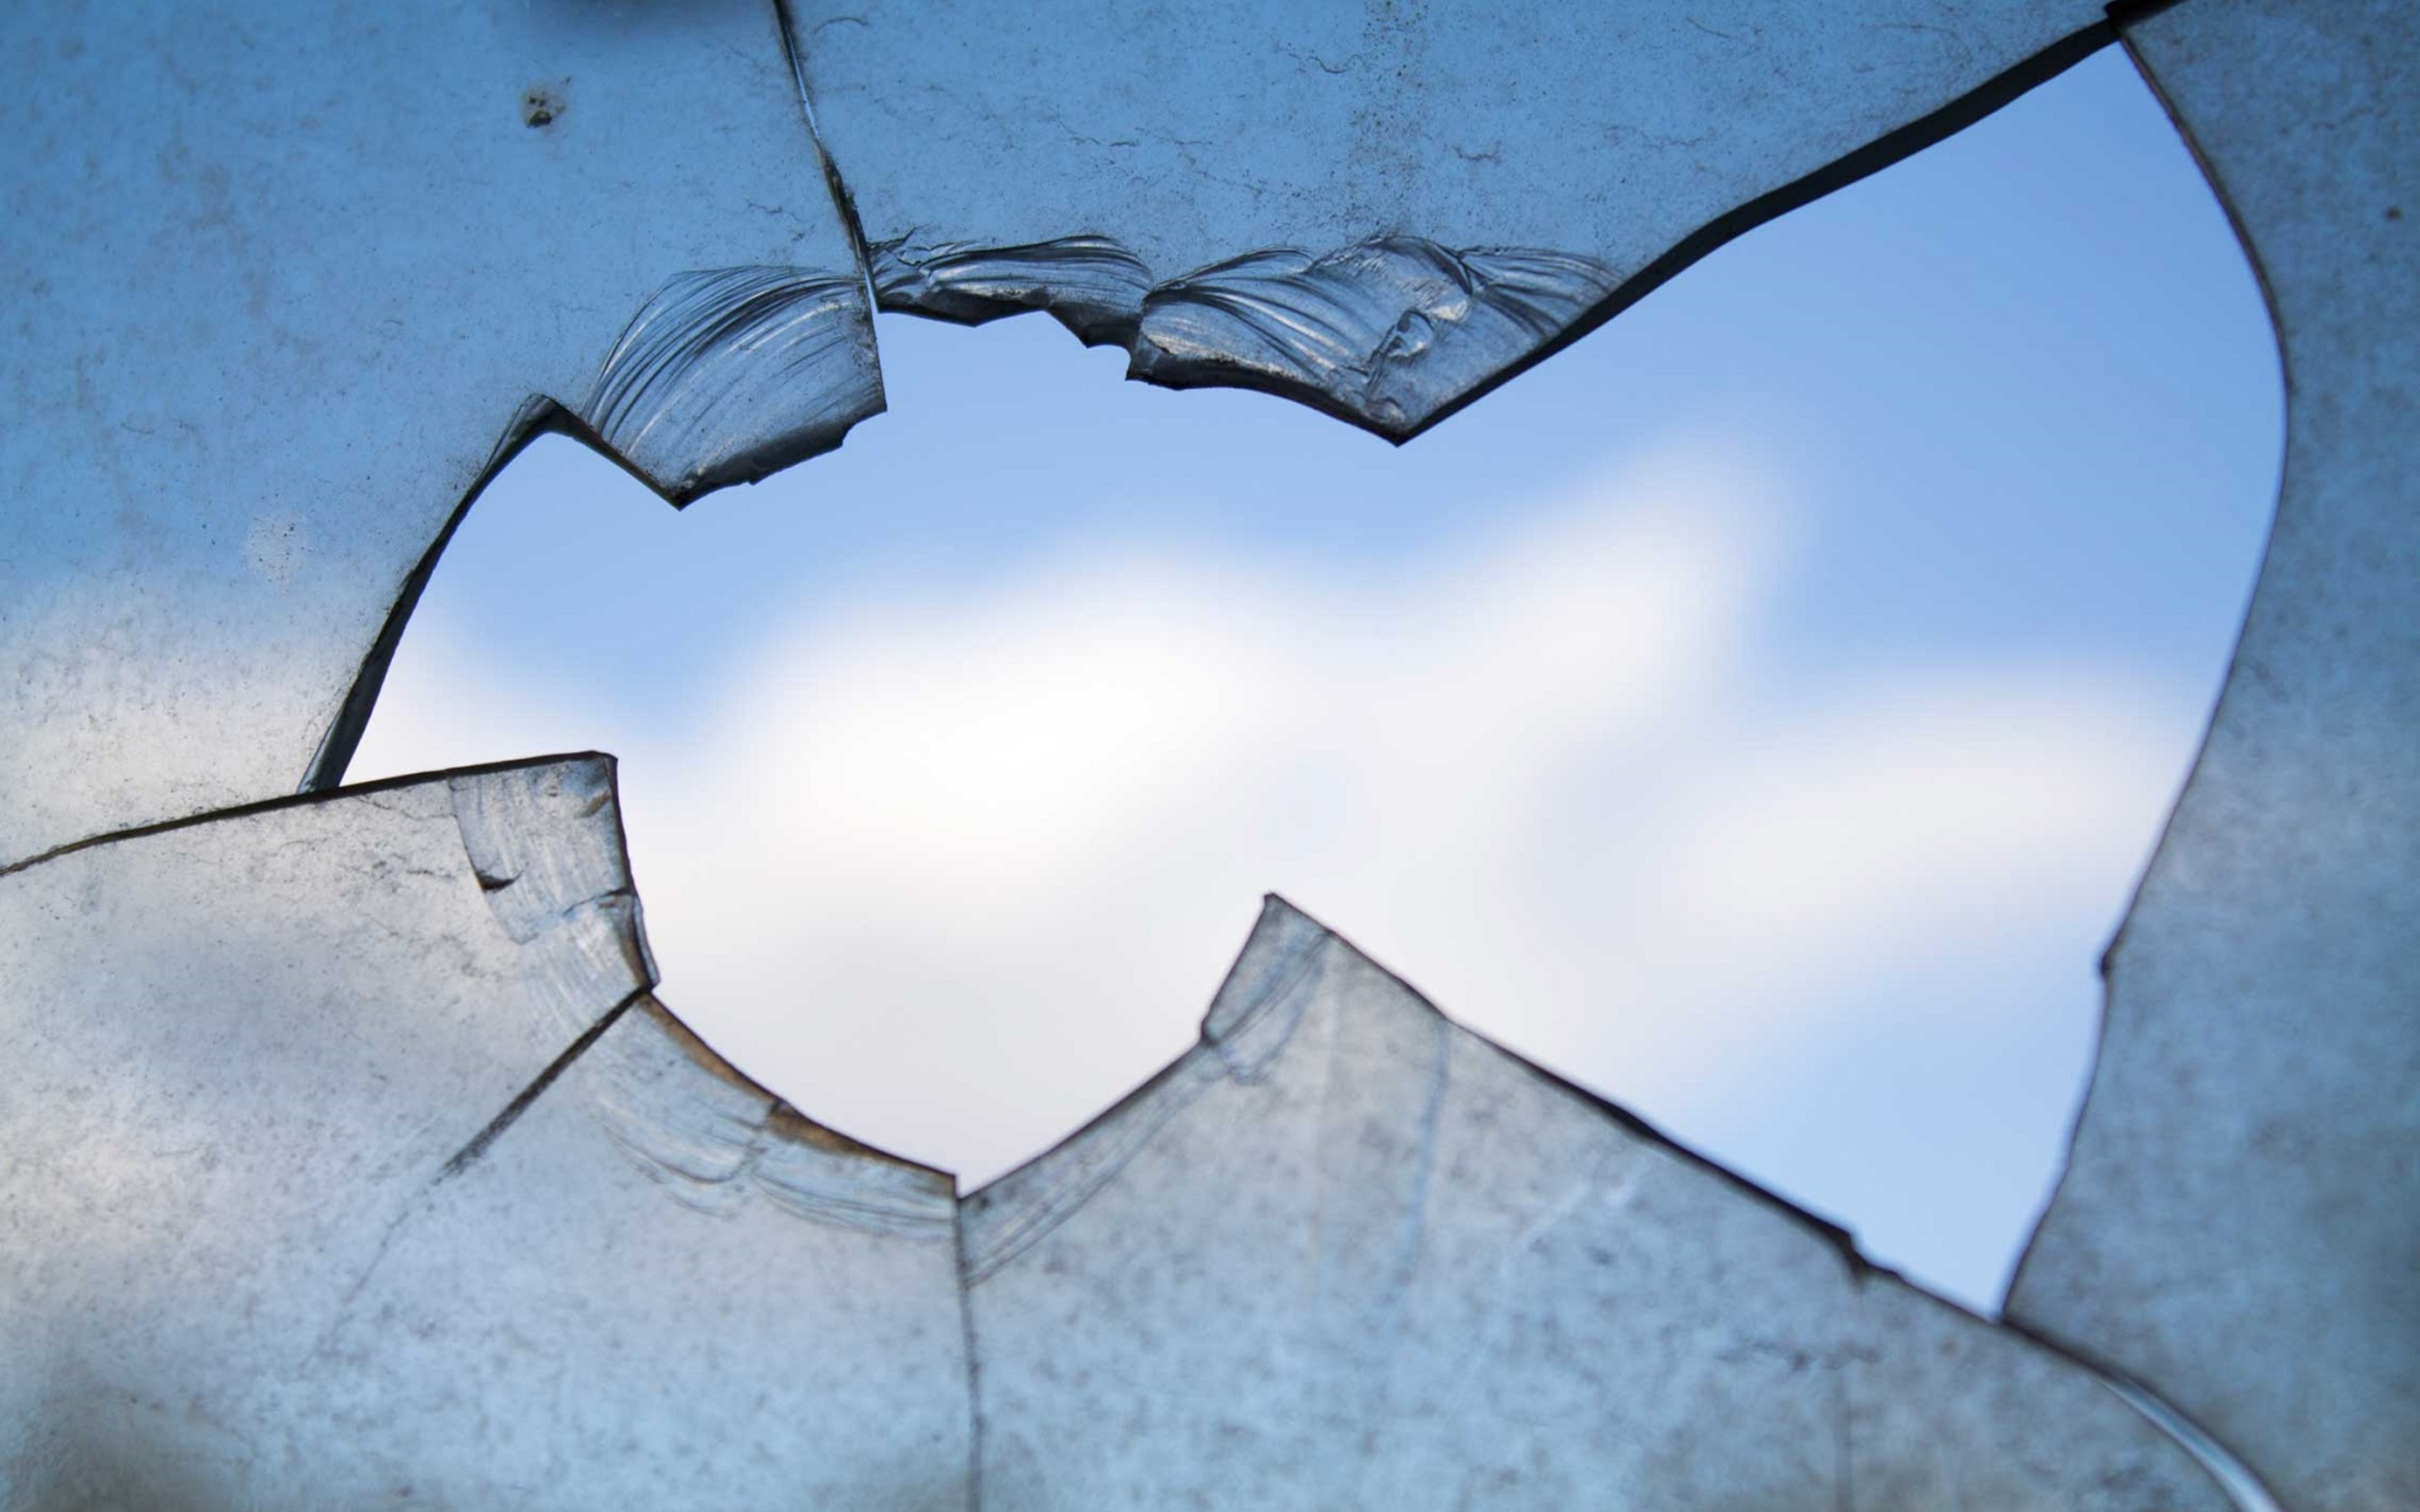 Разбитая стая. Разбитое окно. Трещина на стекле. Разбитые окна. Разбитое стекло в окне.